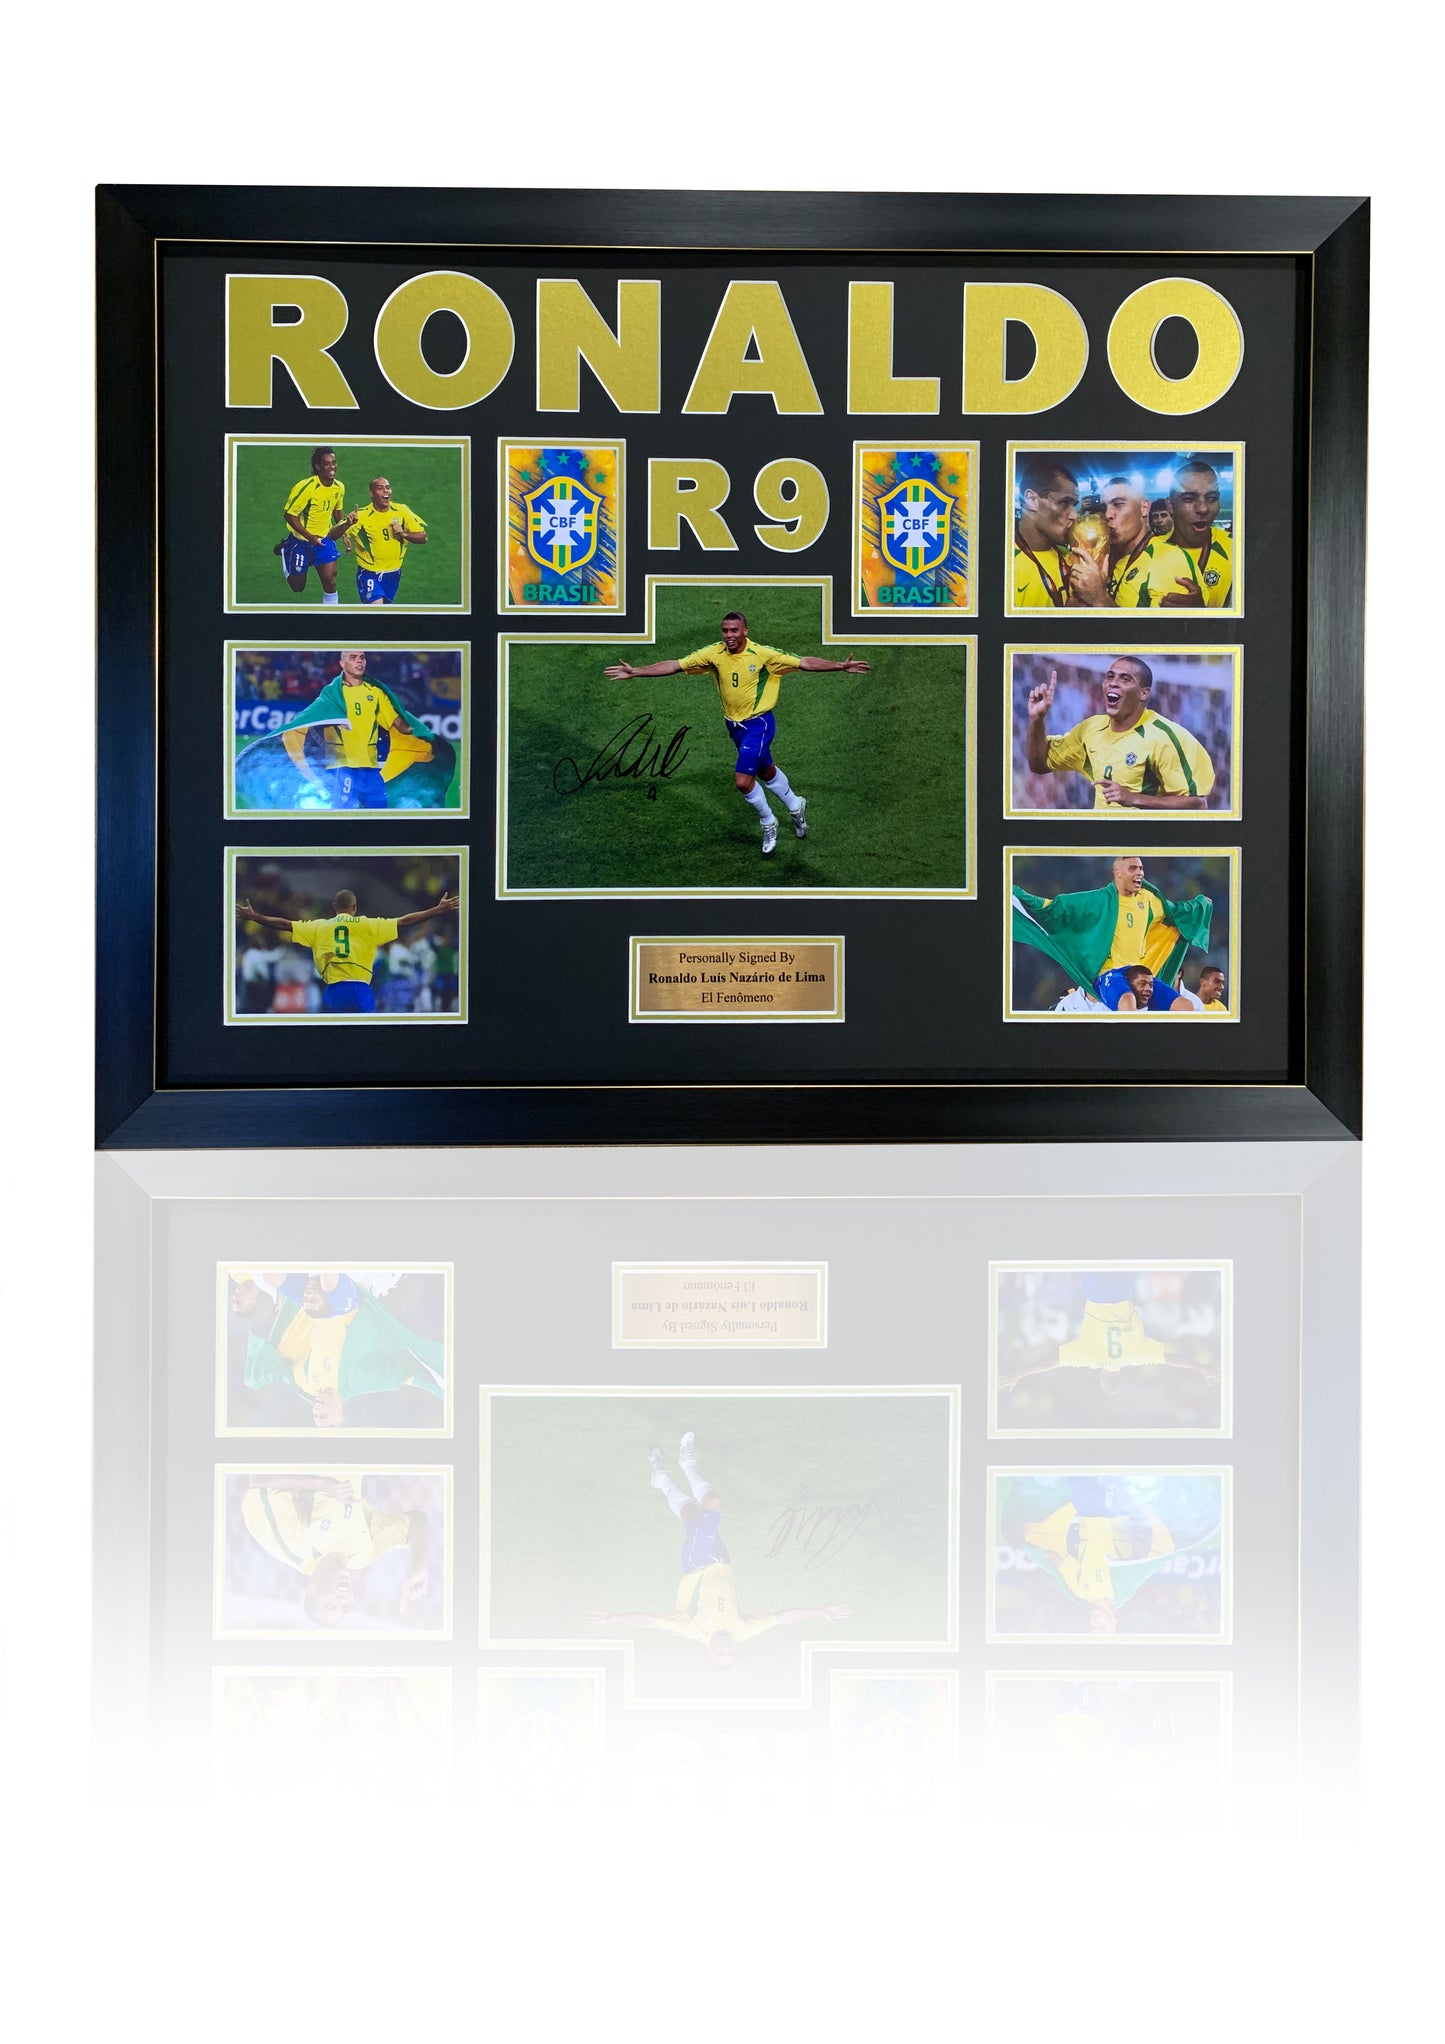 Ronaldo R9 signed framed photo montage display